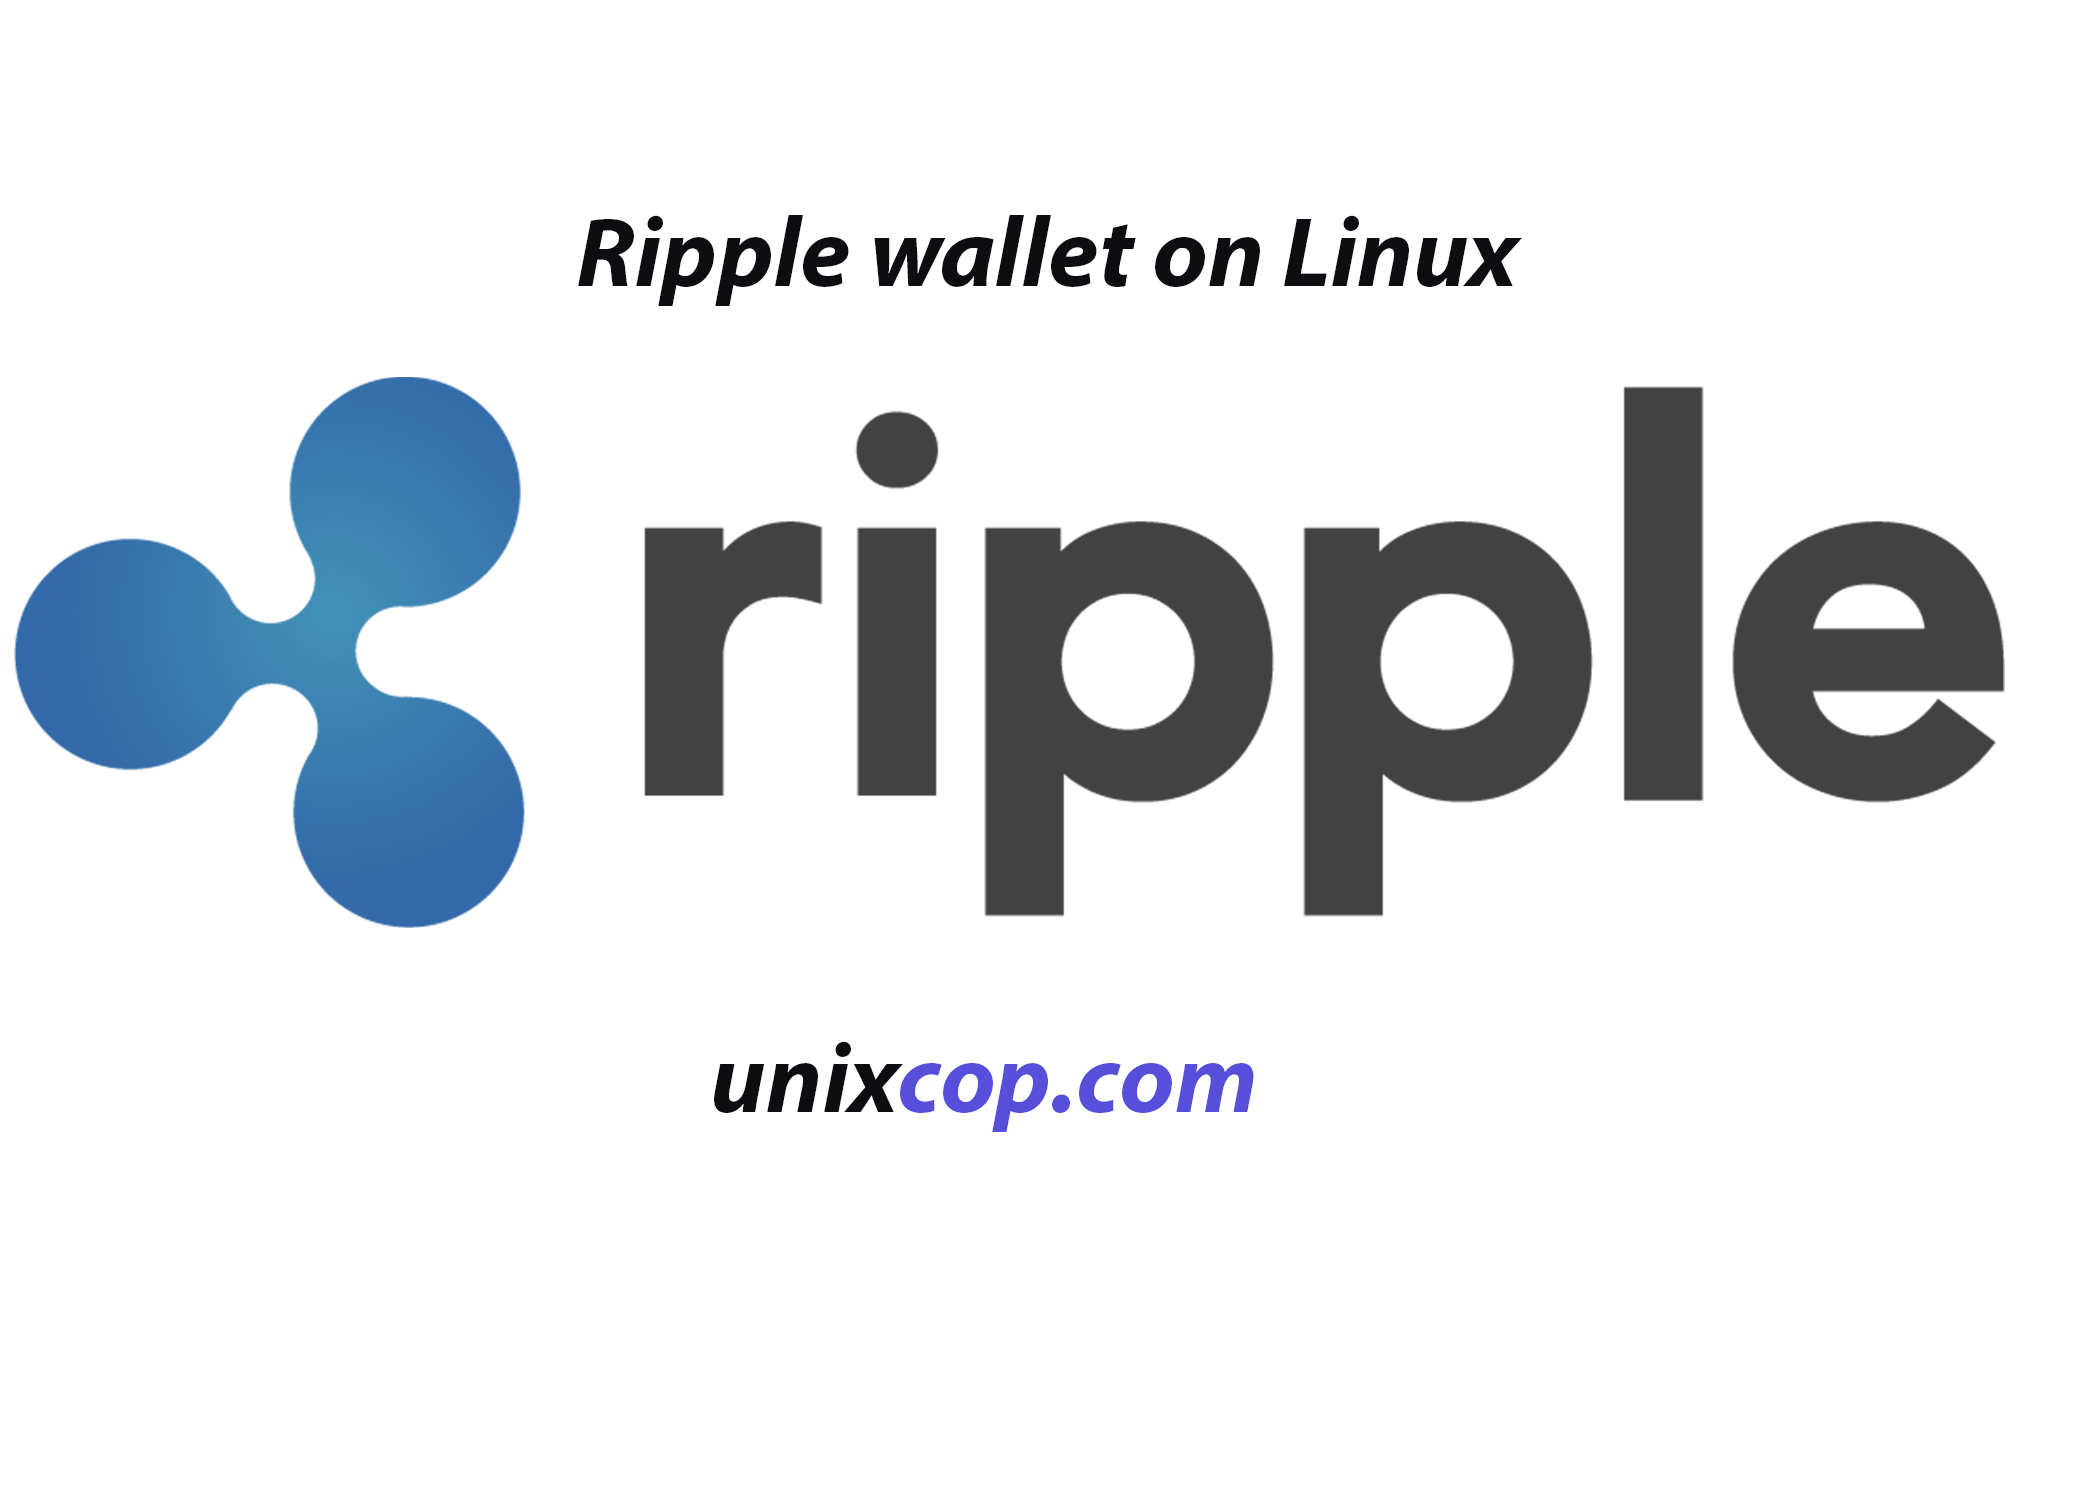 Ripple wallet on Linux